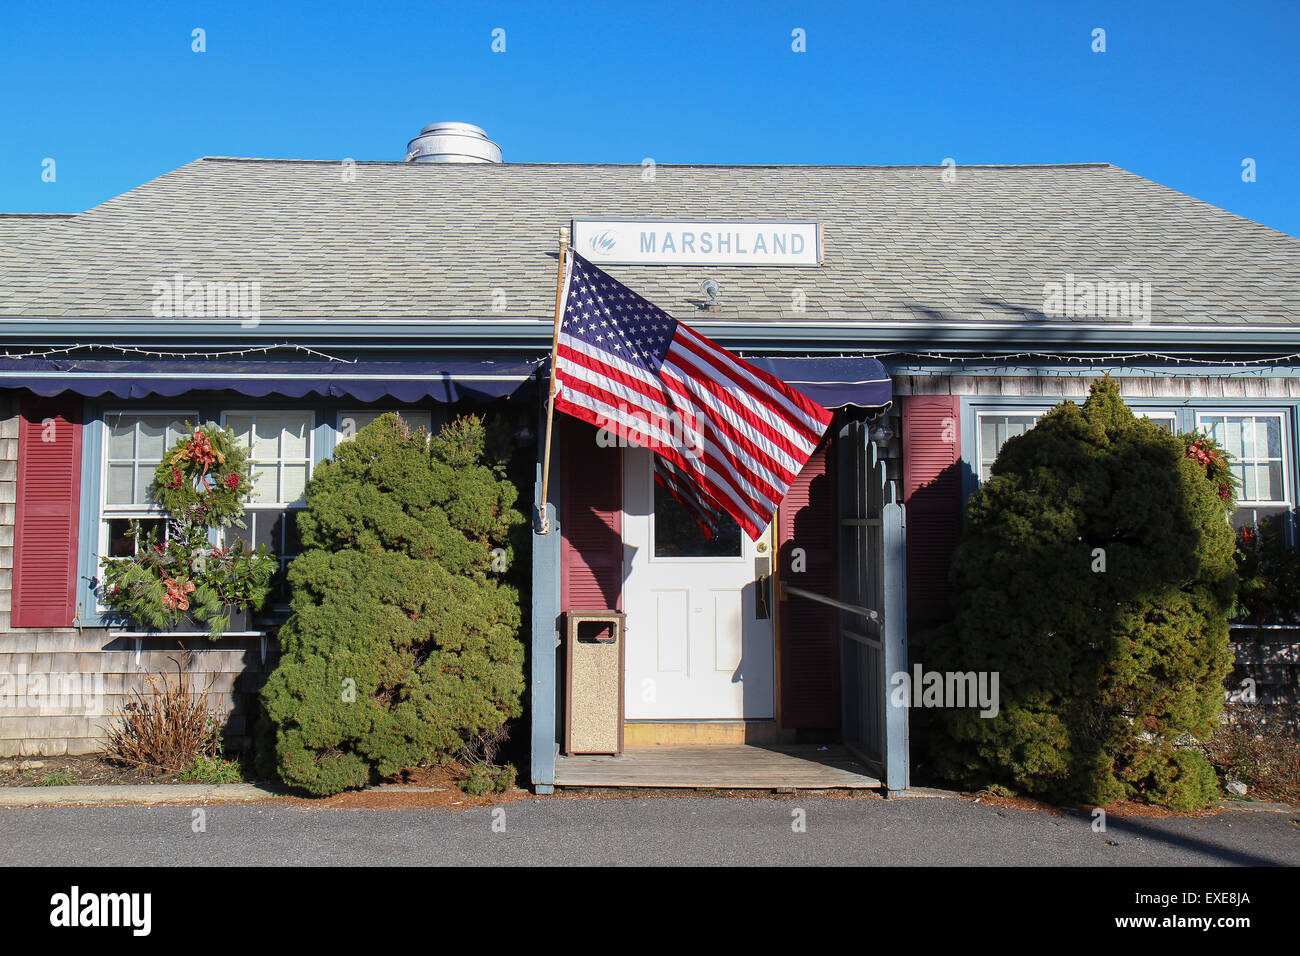 Marshland restaurant, Sandwich, Cape Cod, Massachusetts, USA Stock Photo